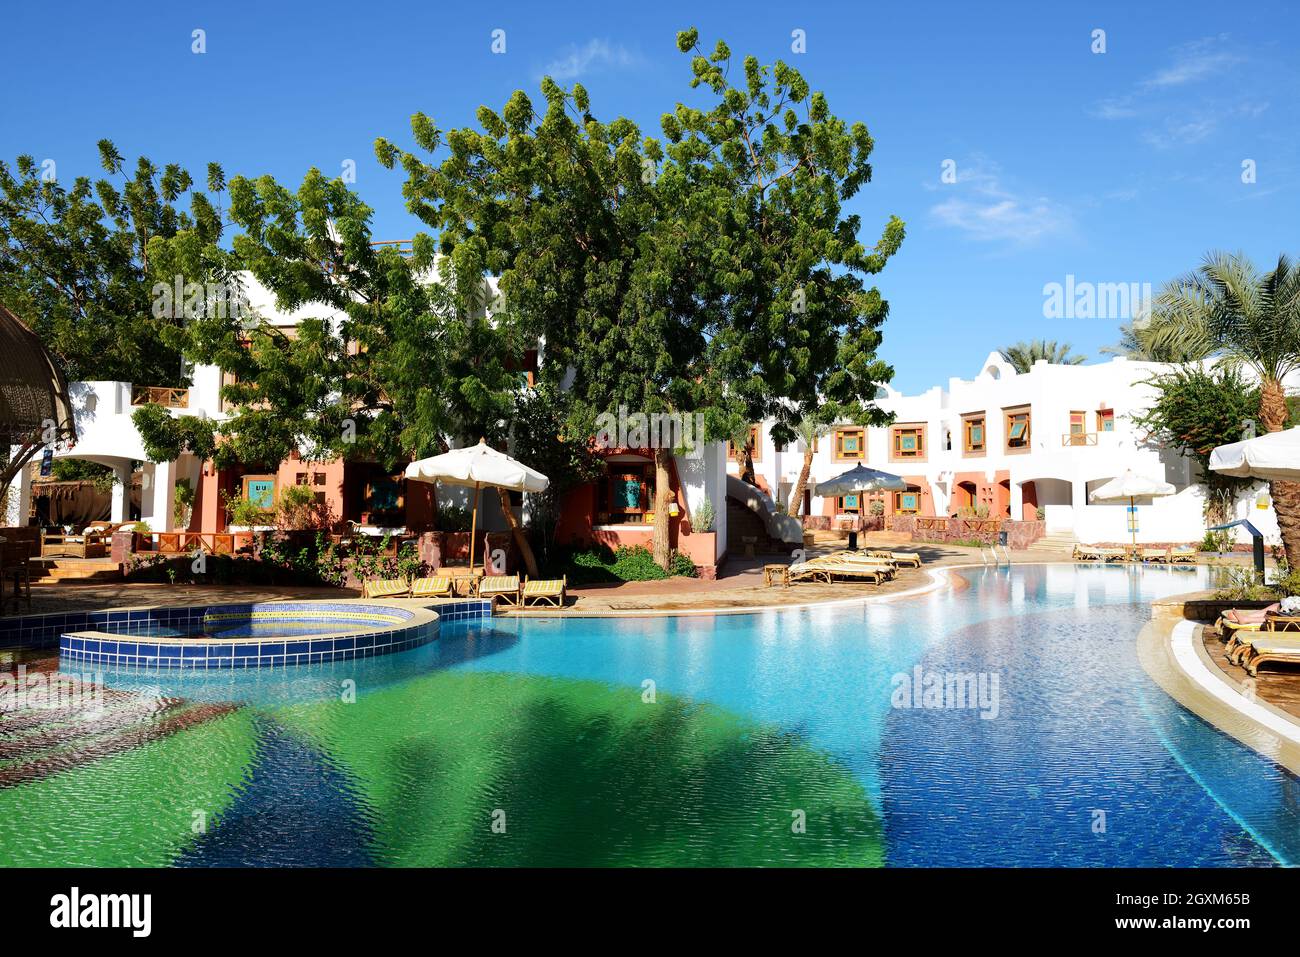 The swimming pool at luxury hotel, Sharm el Sheikh, Egypt Stock Photo